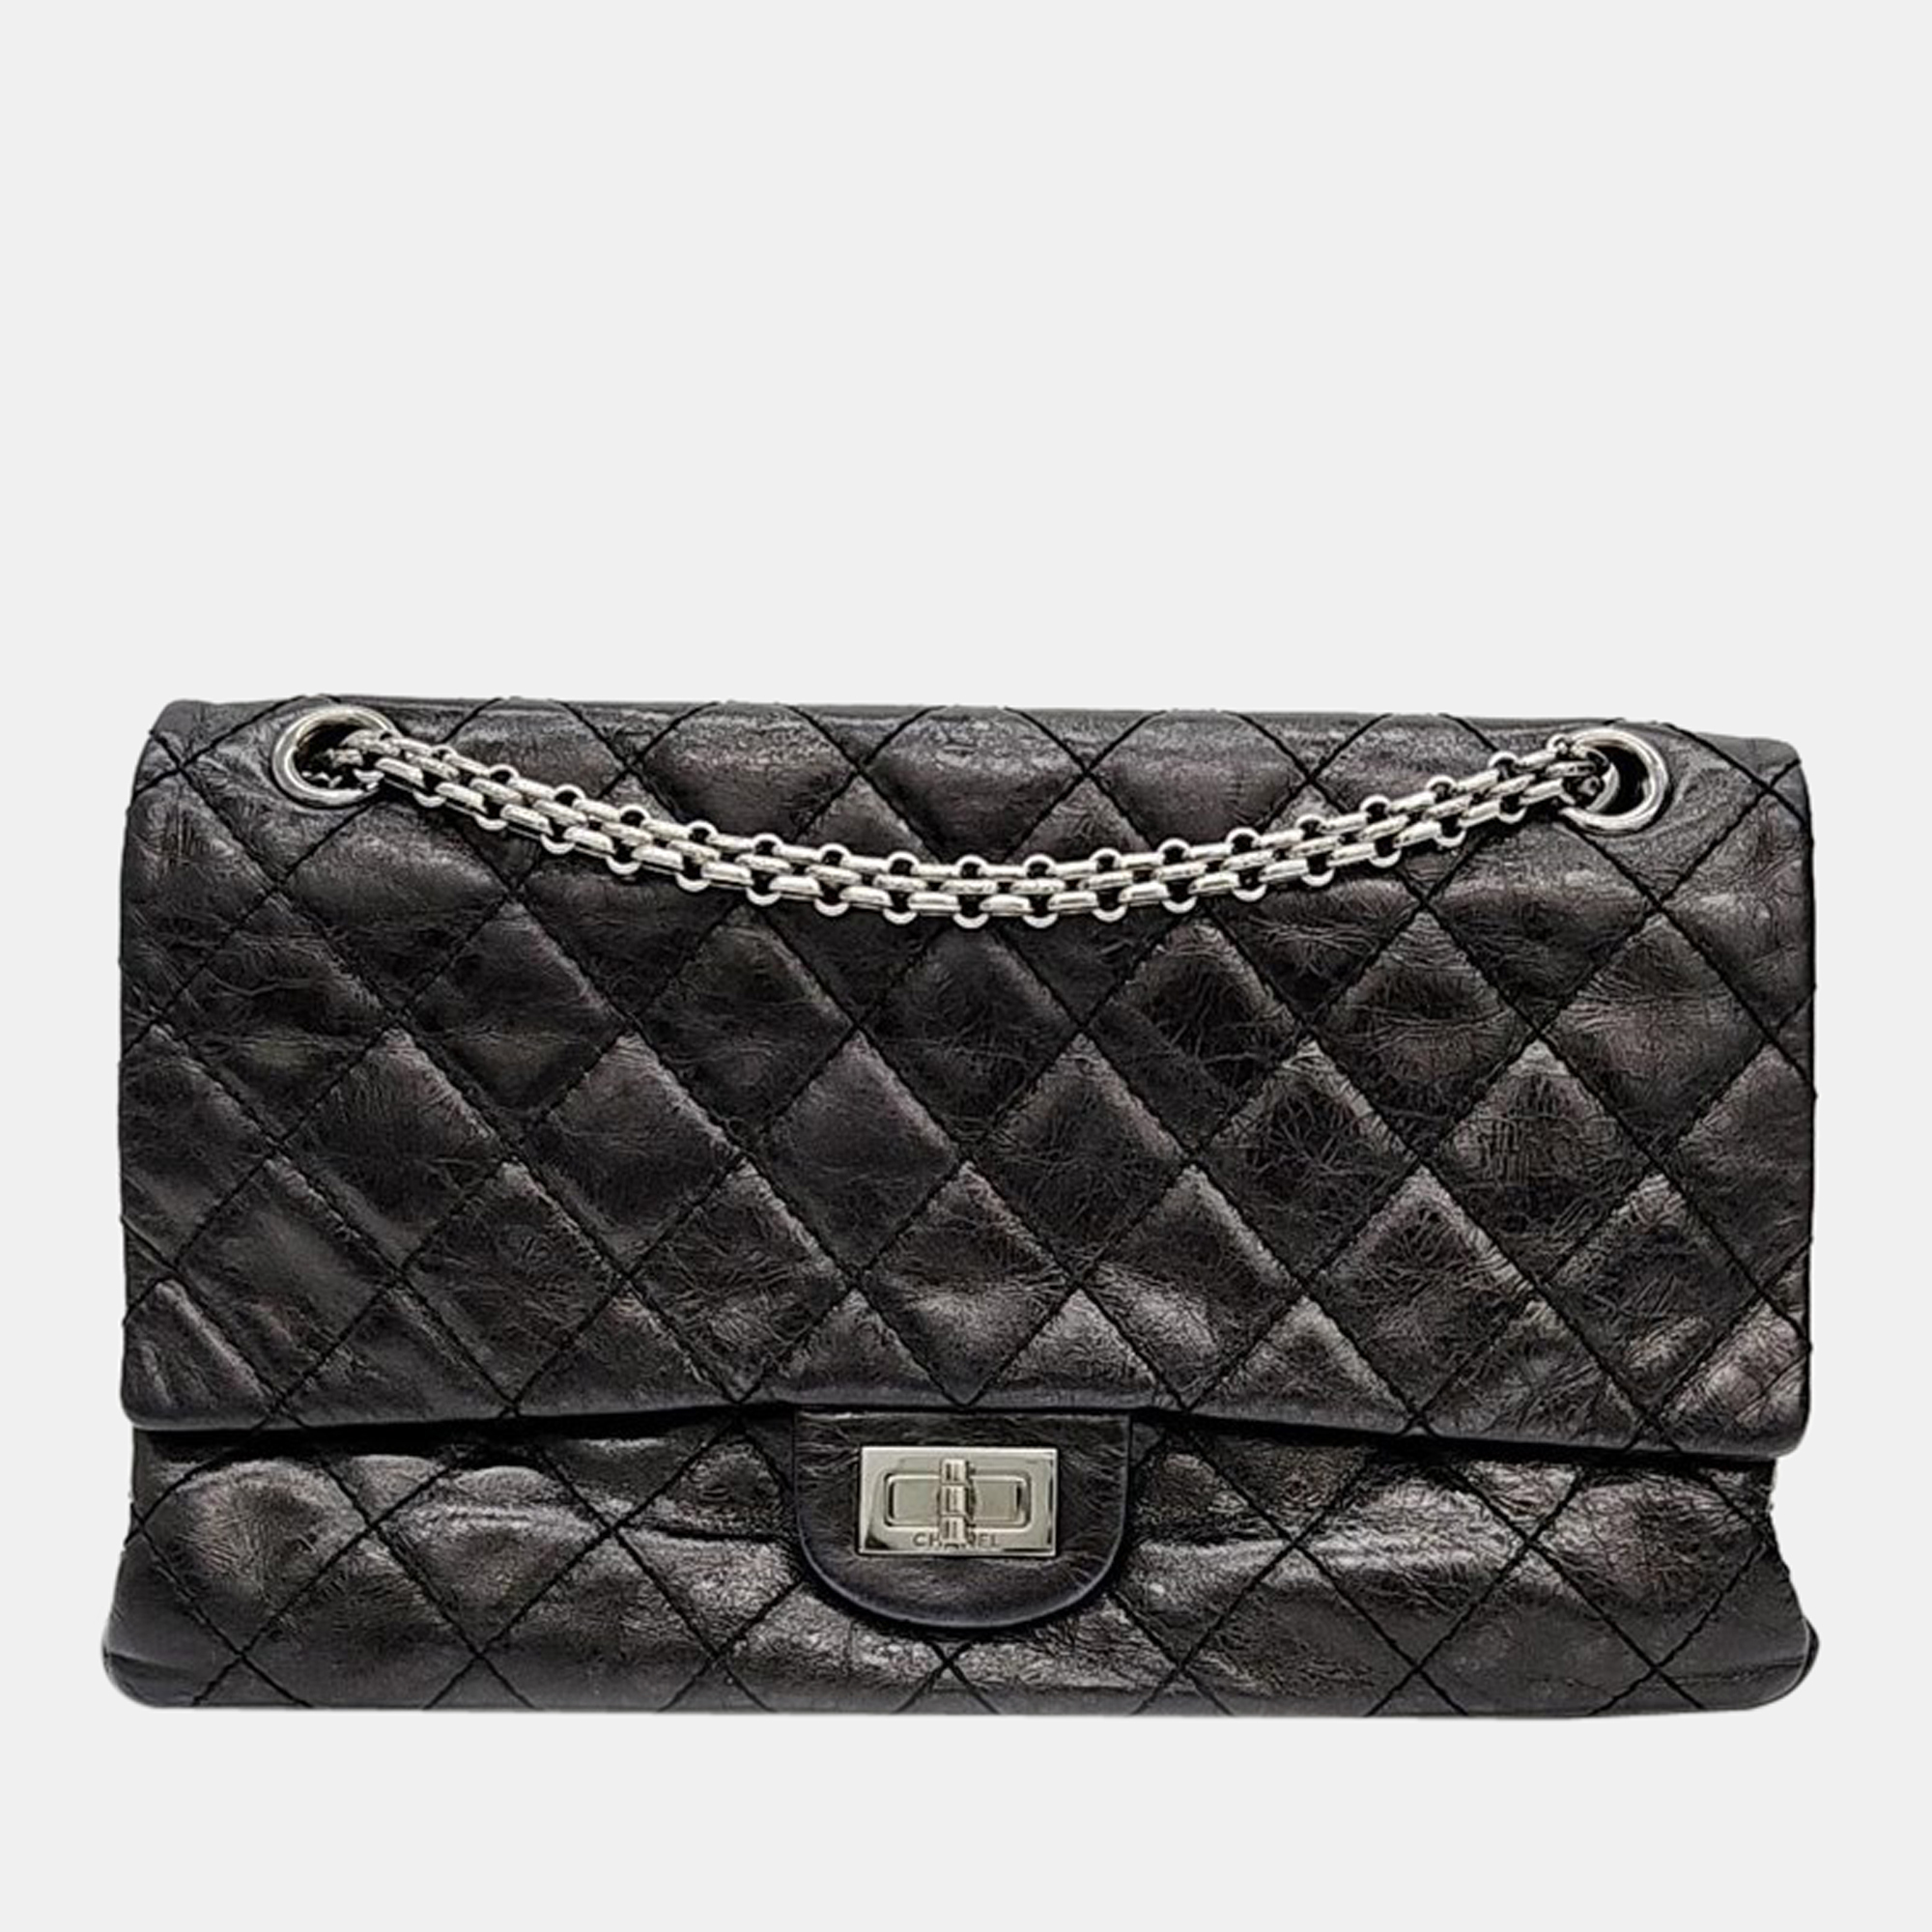 Chanel black leather 2.55 reissue bag